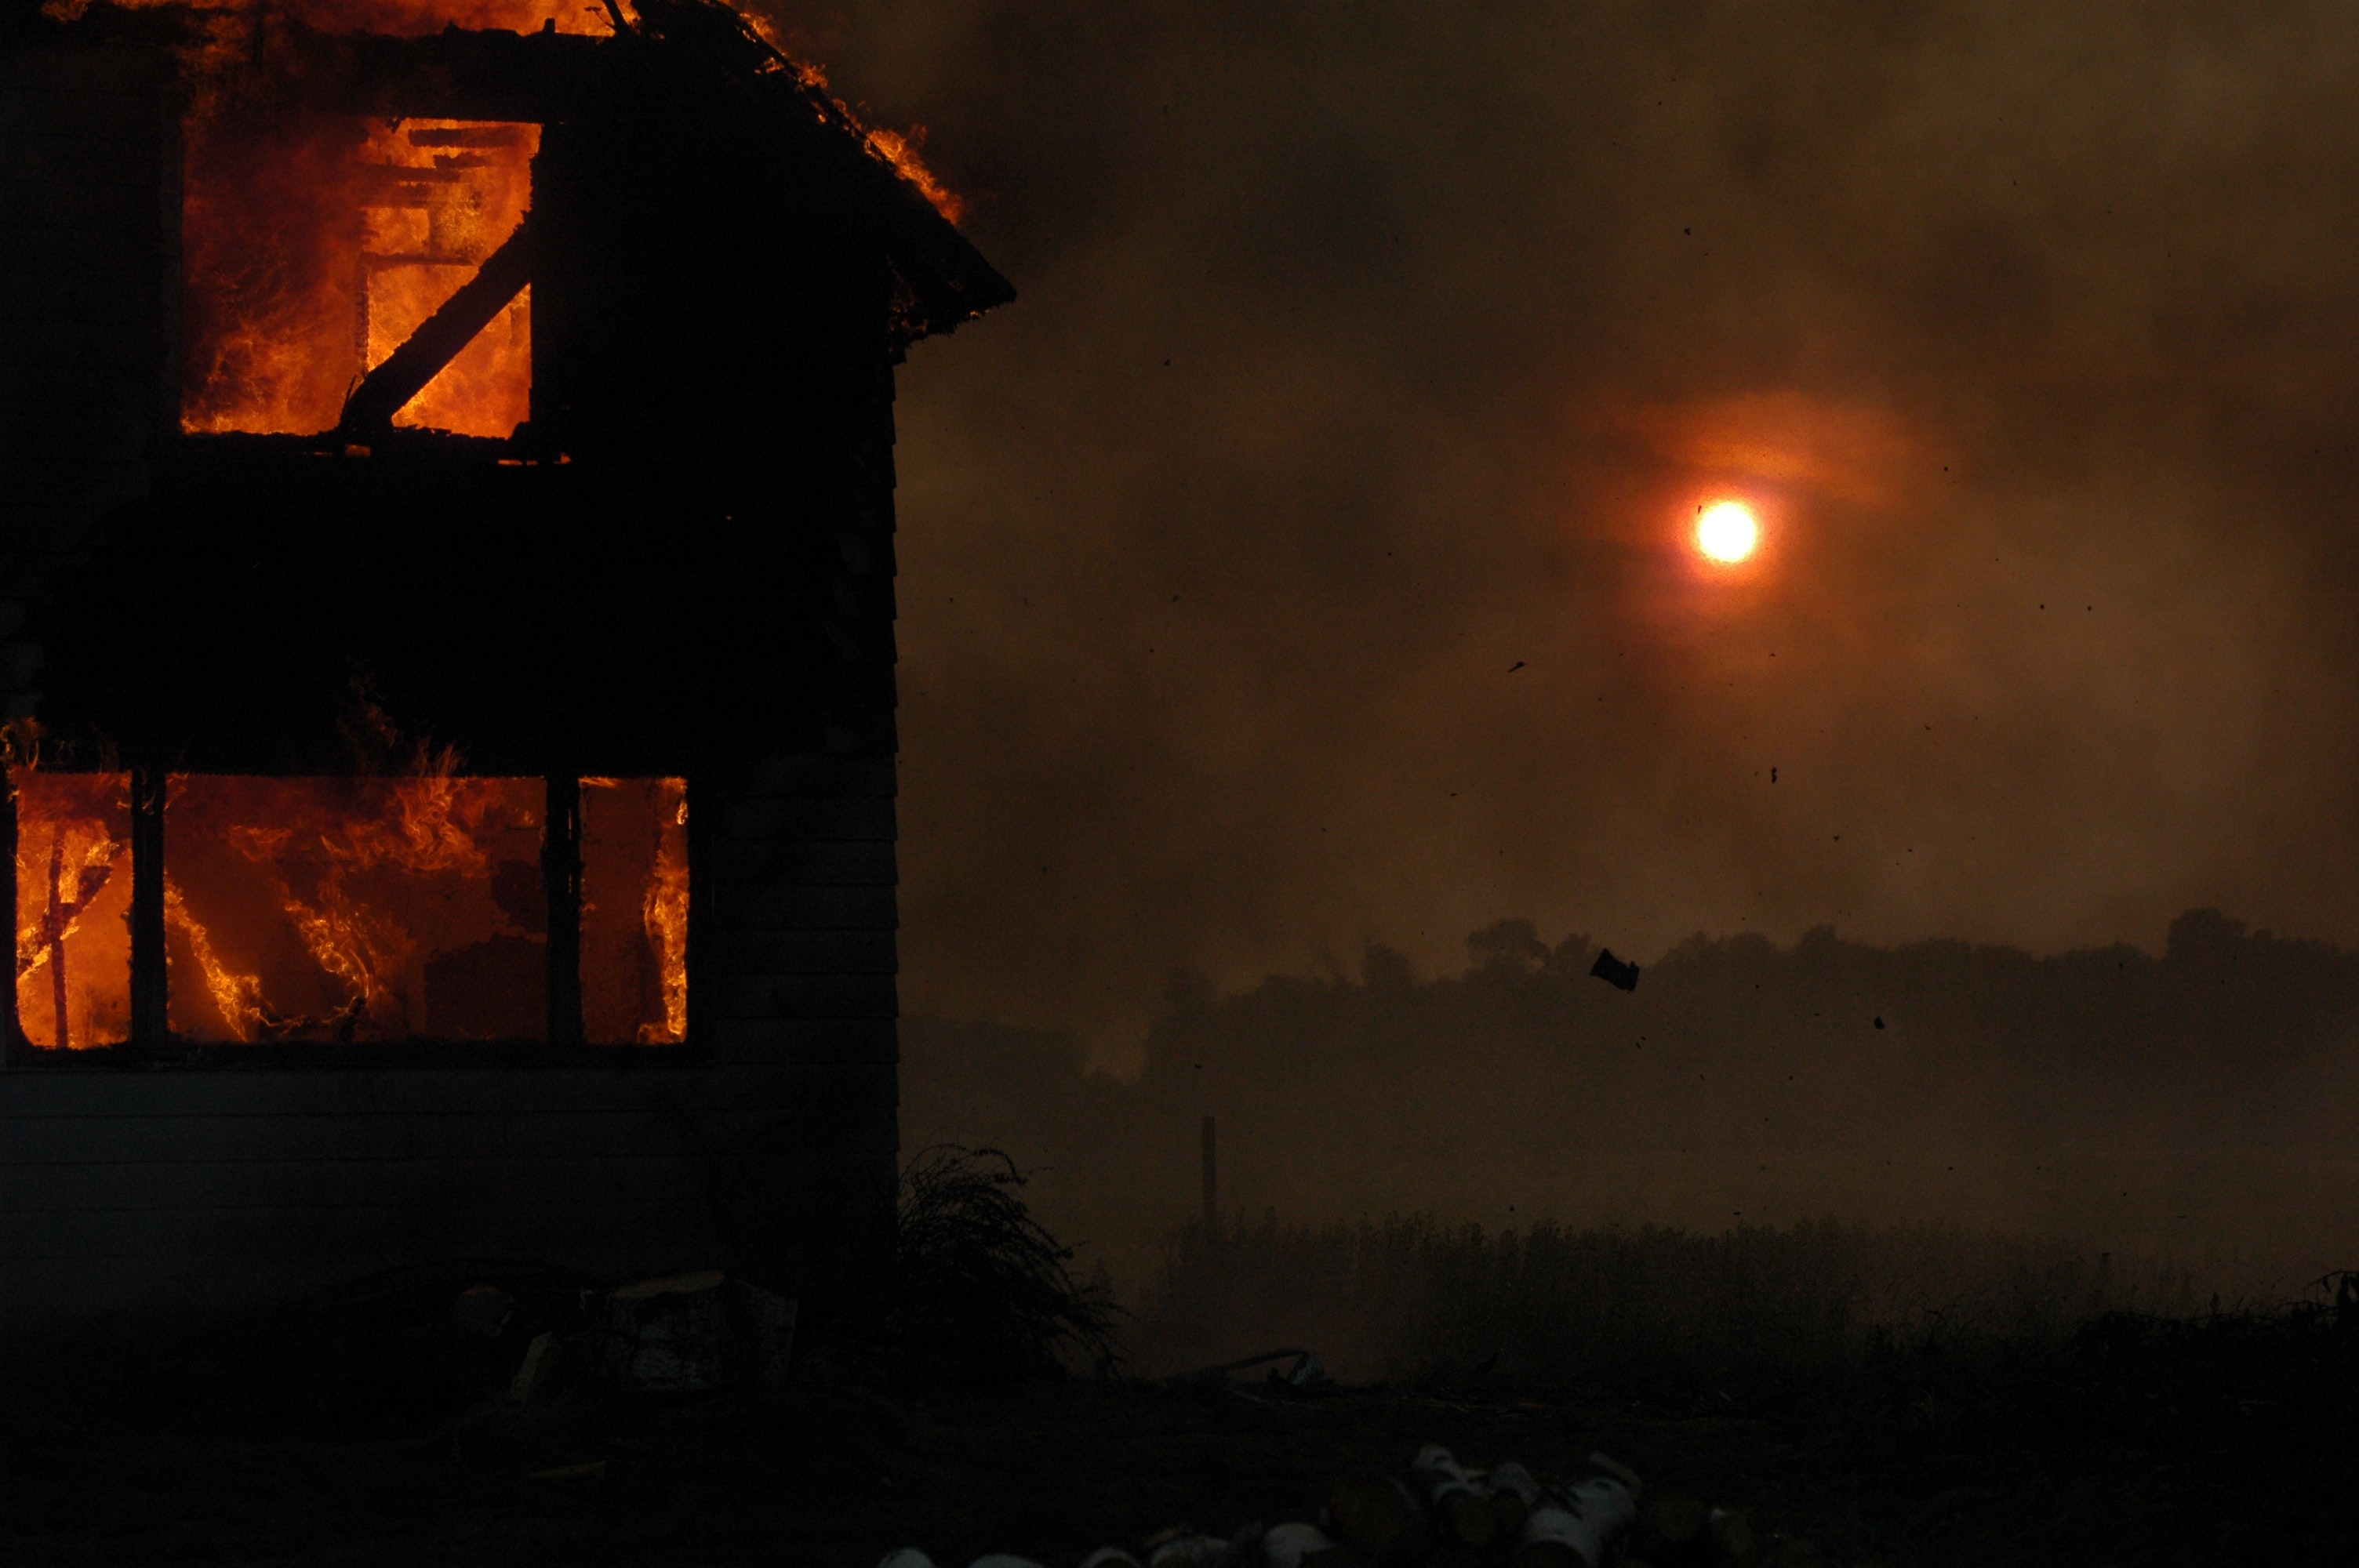 Burning house with sun bleeding through the smoke.